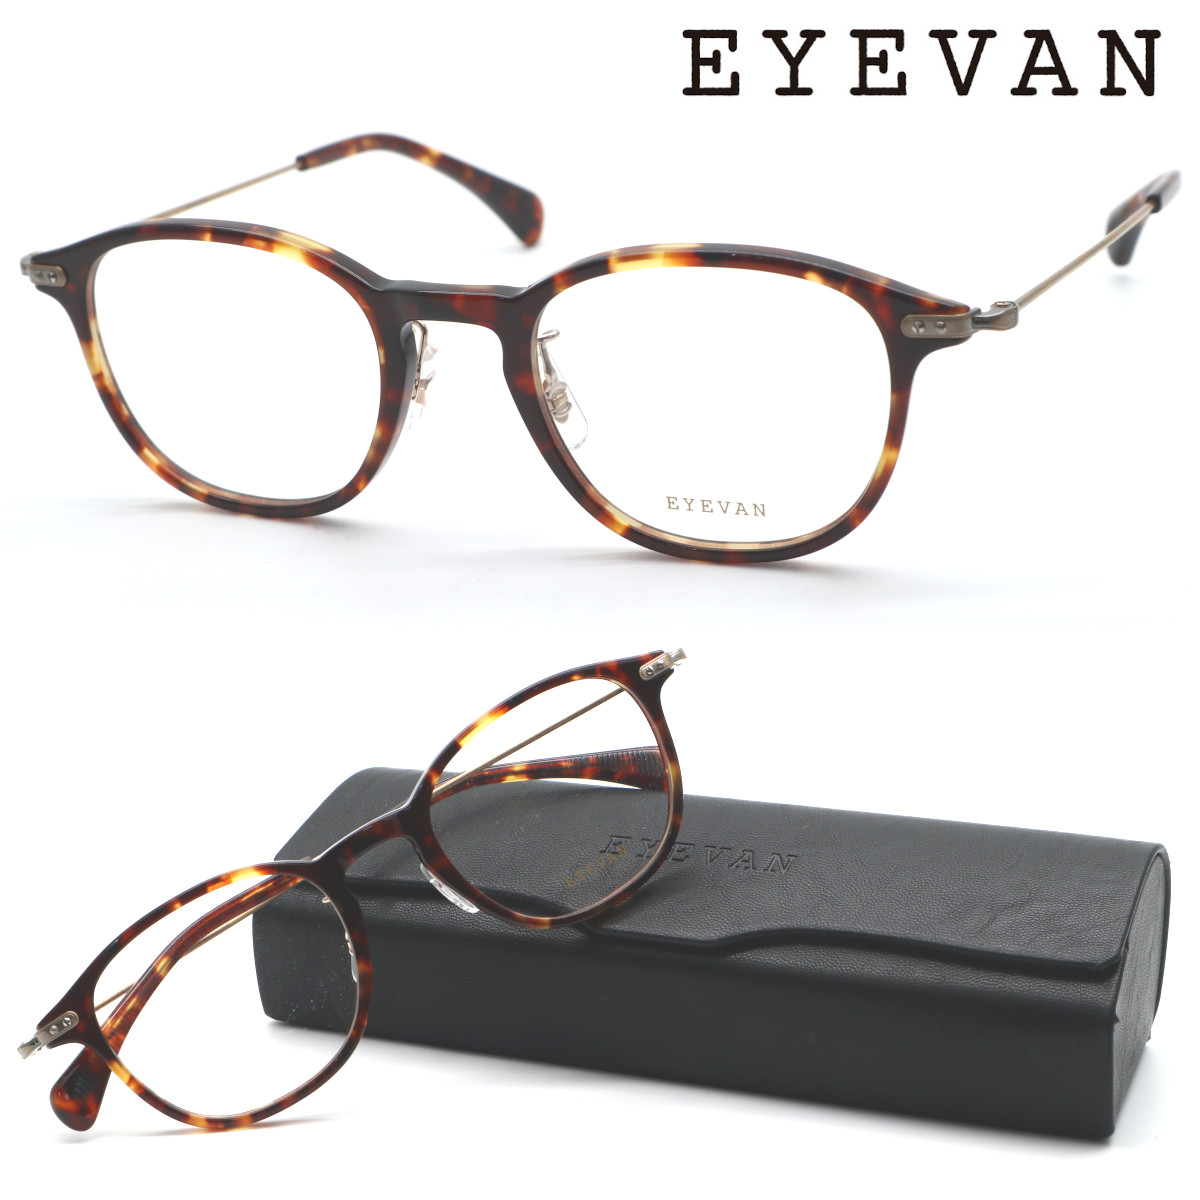 EYEVAN アイヴァン ブラック ゴールド メガネ カジュアル 眼鏡 